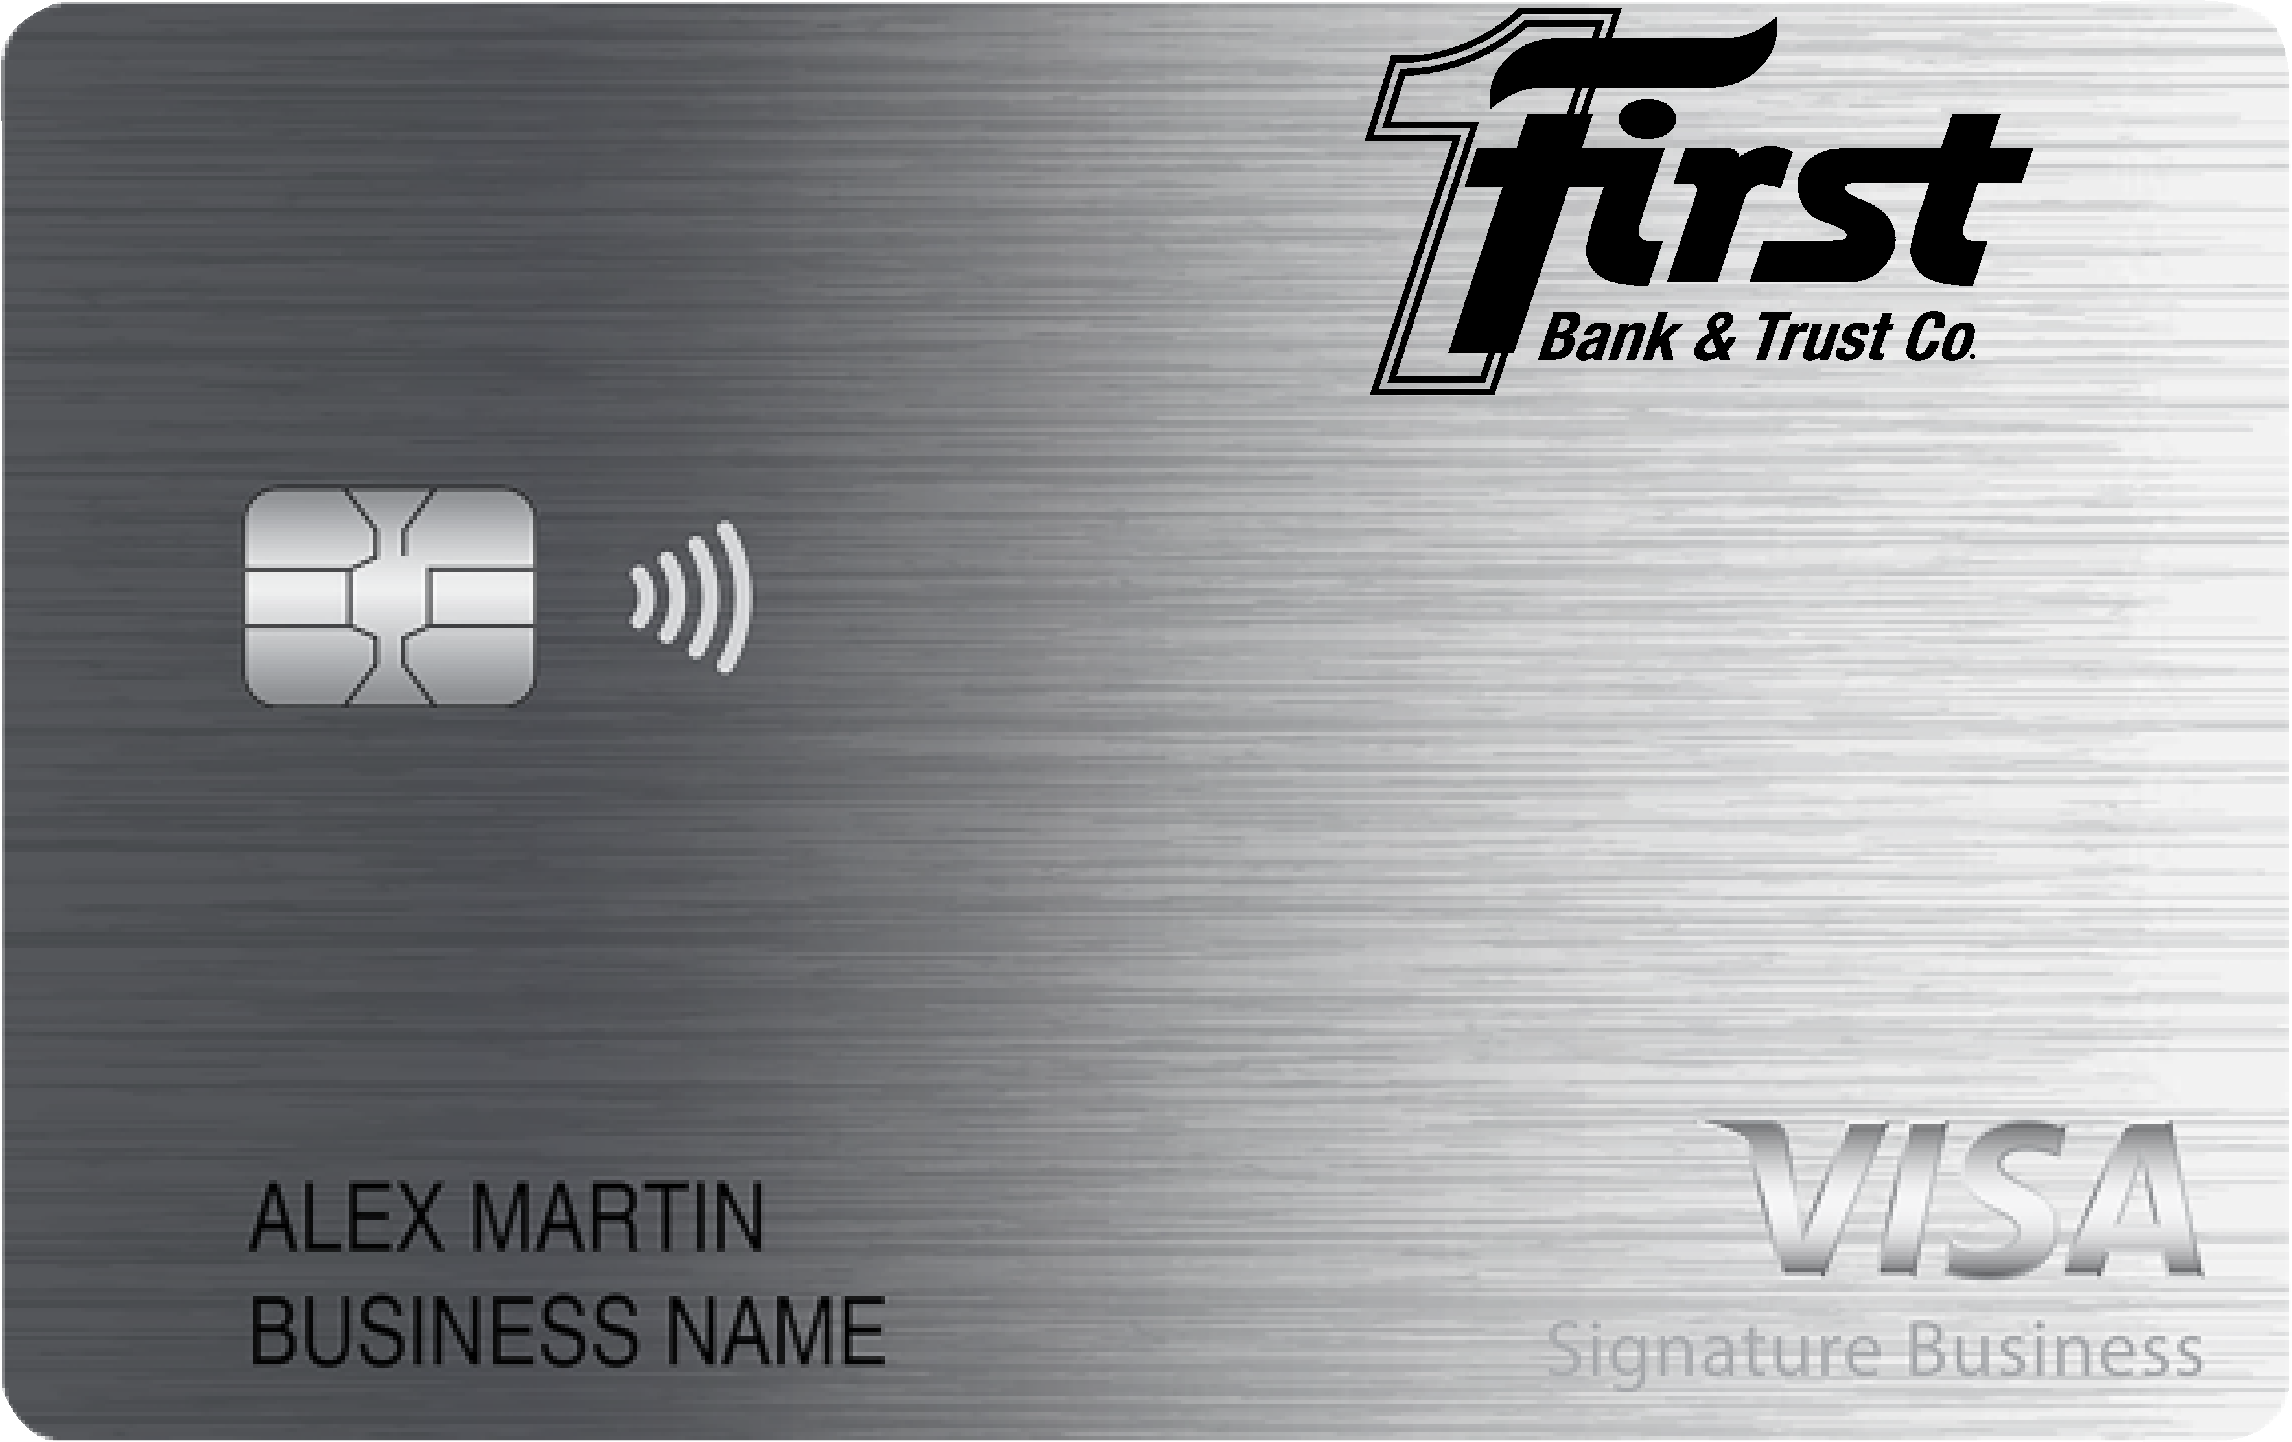 First Bank & Trust Co Smart Business Rewards Card